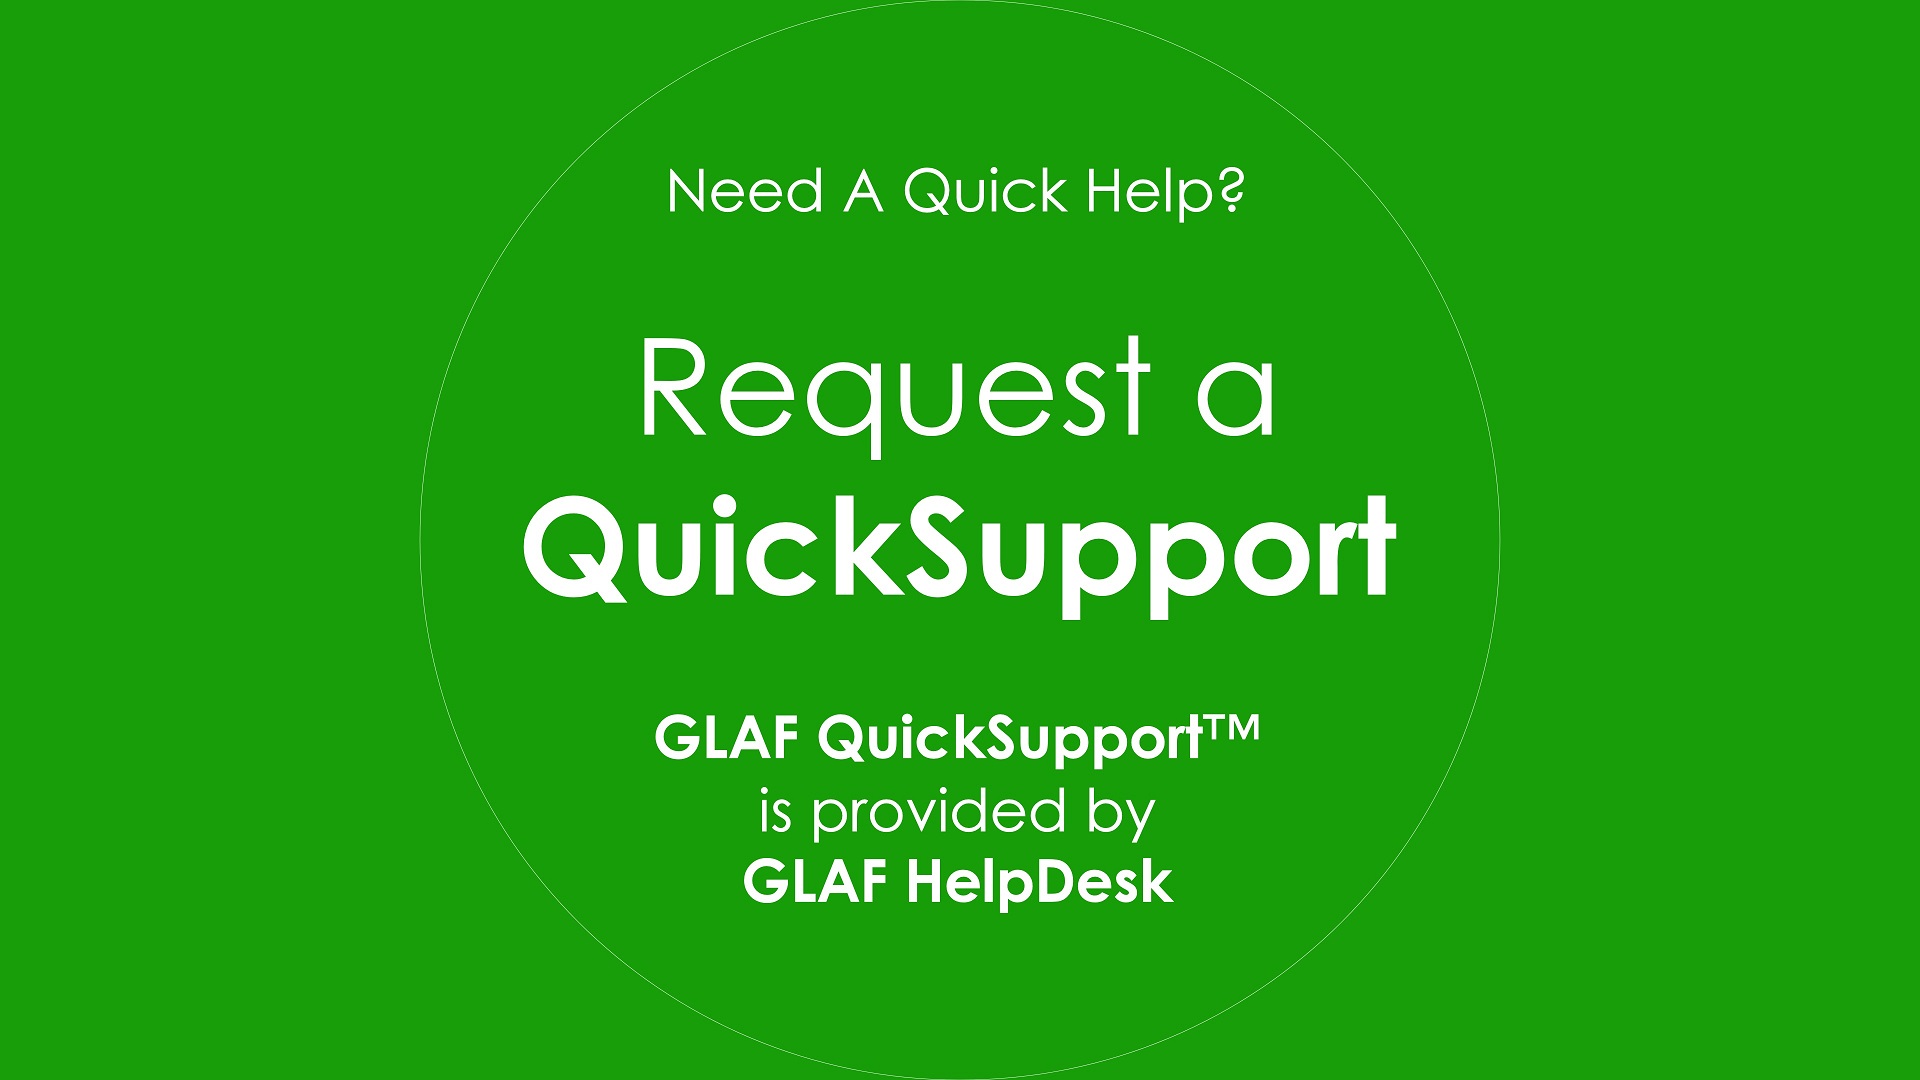 GLAF QuickSupport™